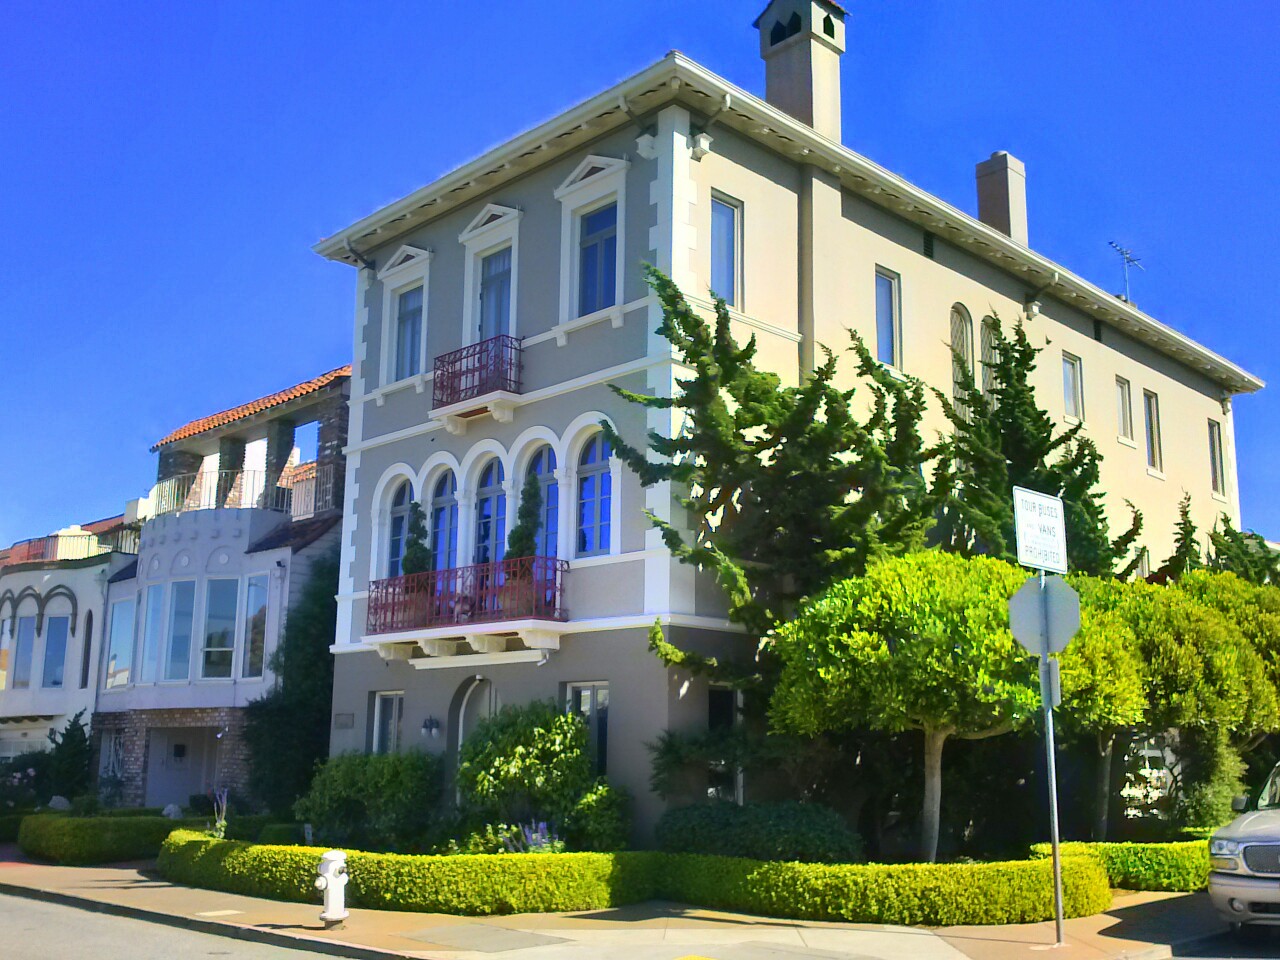 Agent San Francisco SF Real Estate